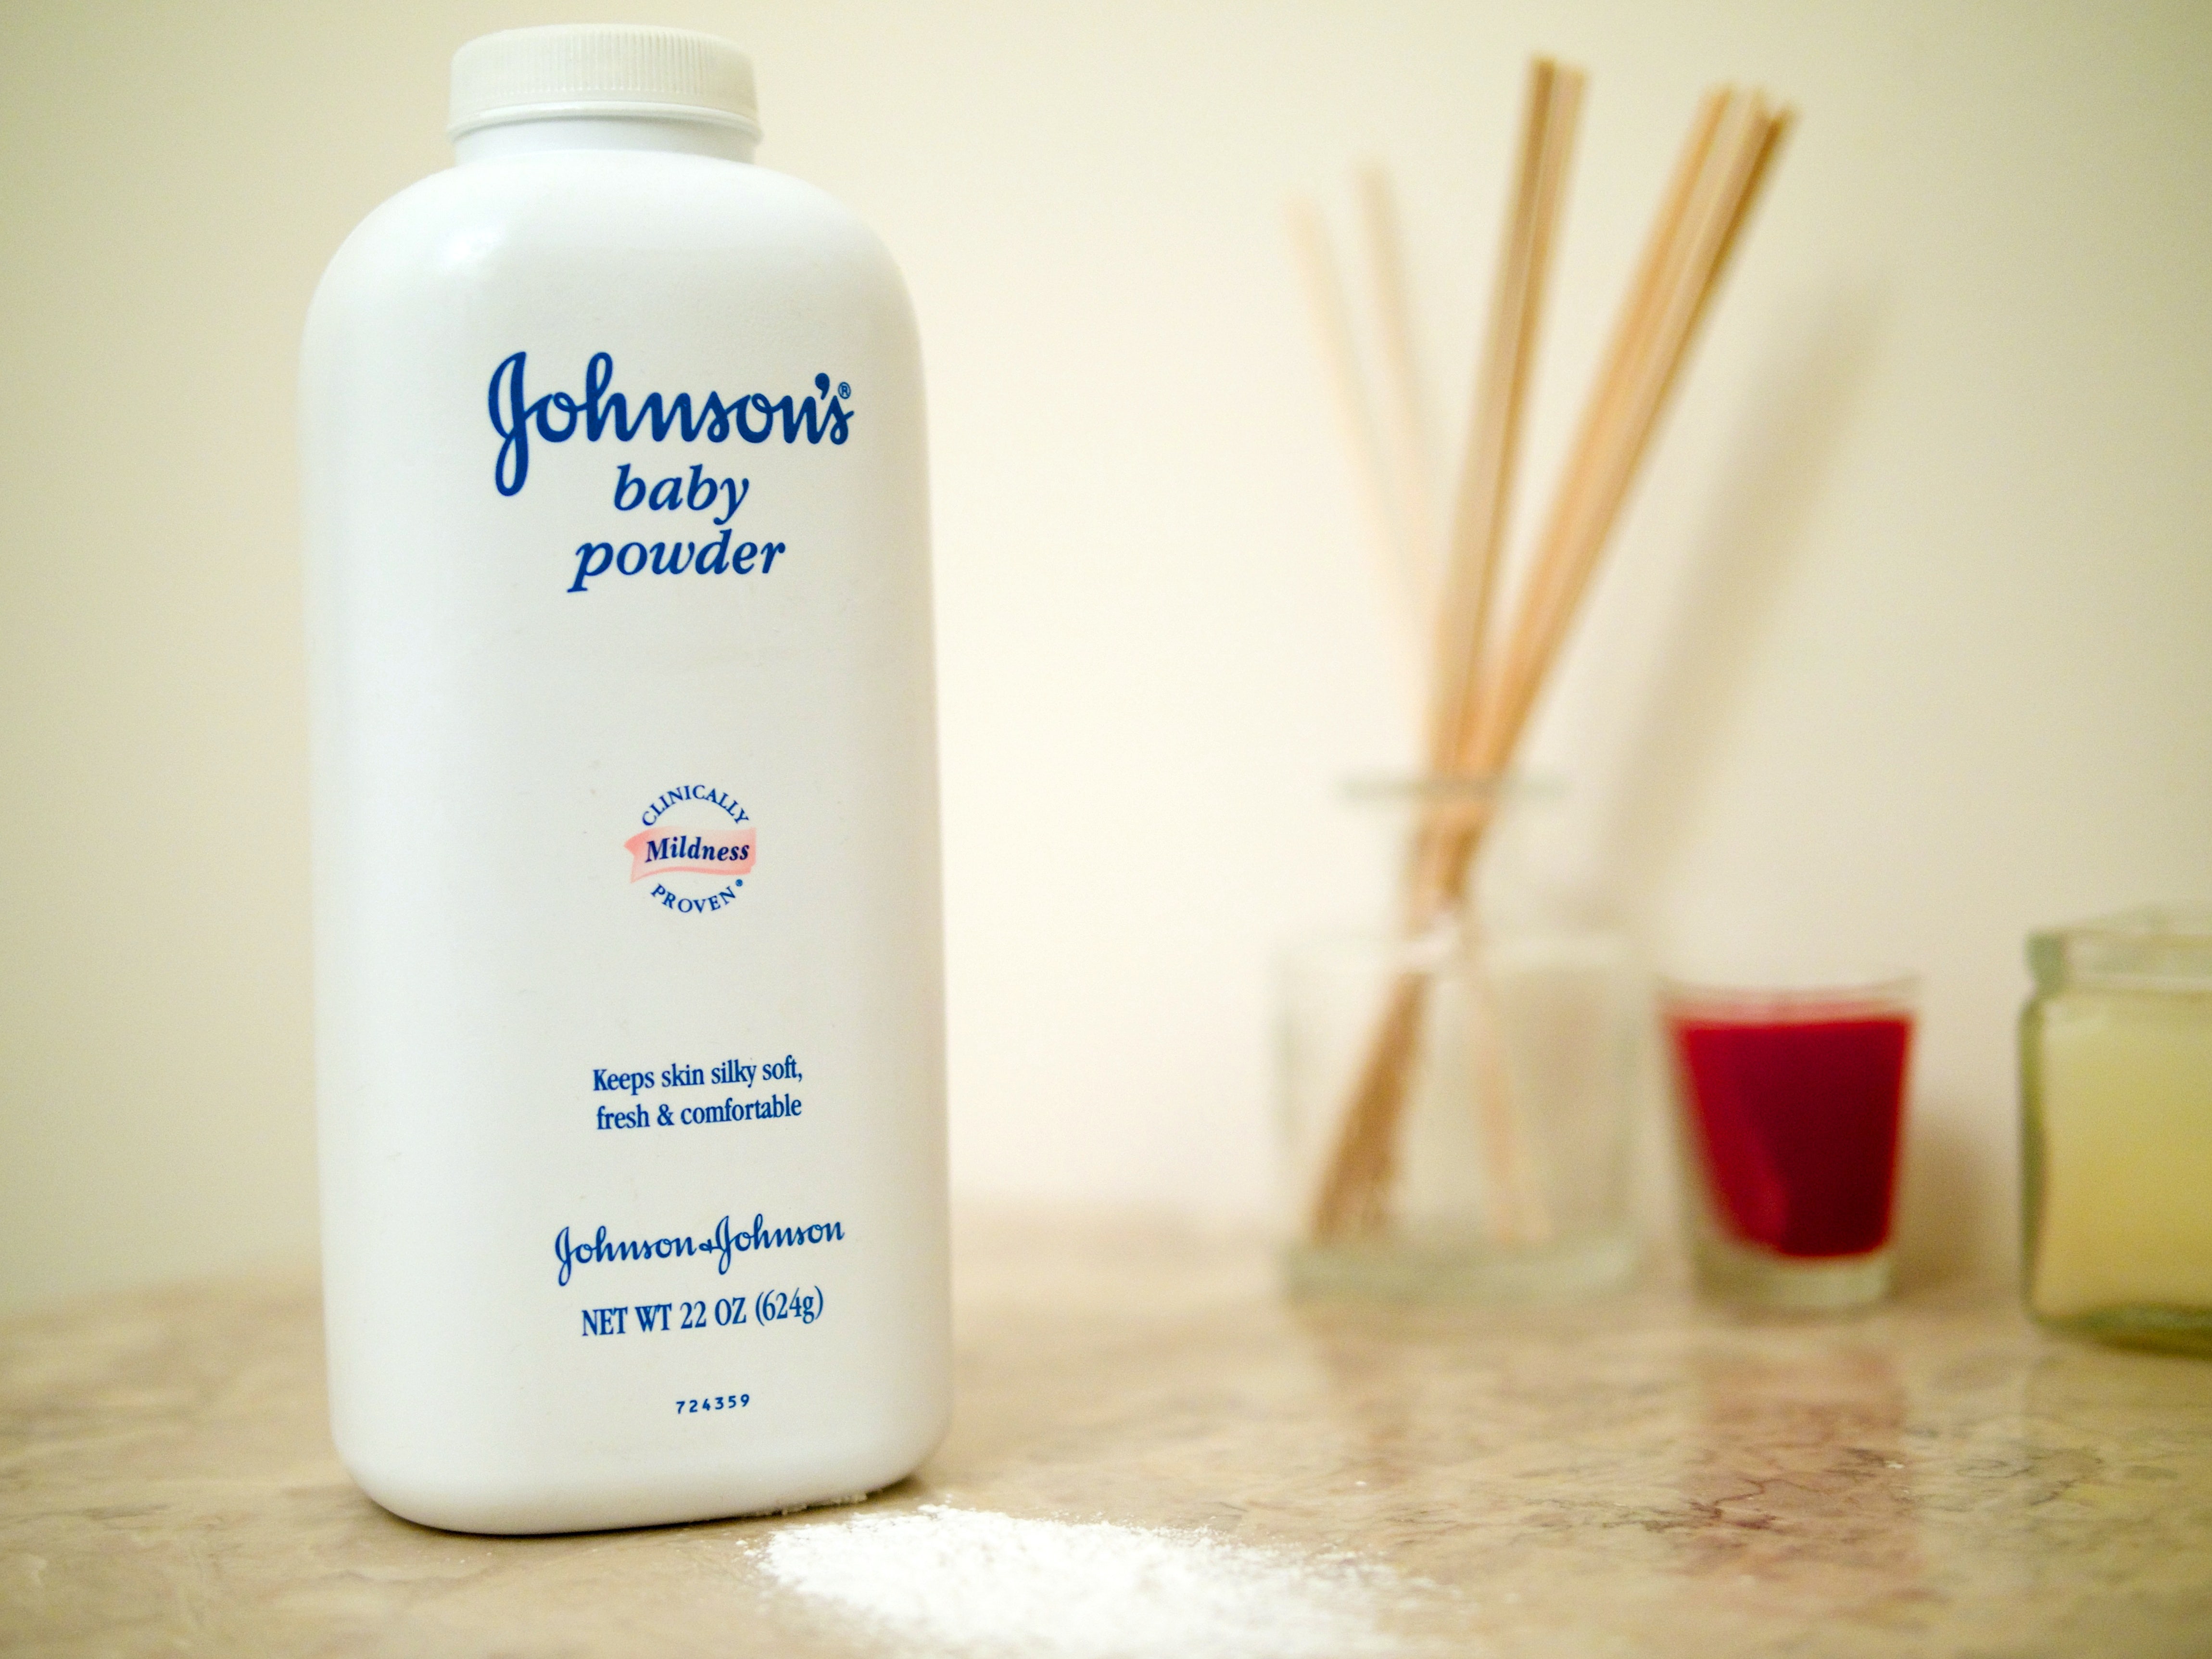 Johnson & Johnson Pulls Talc-Based Baby Powder From US, Canada As Cancer Claims Kill Demand